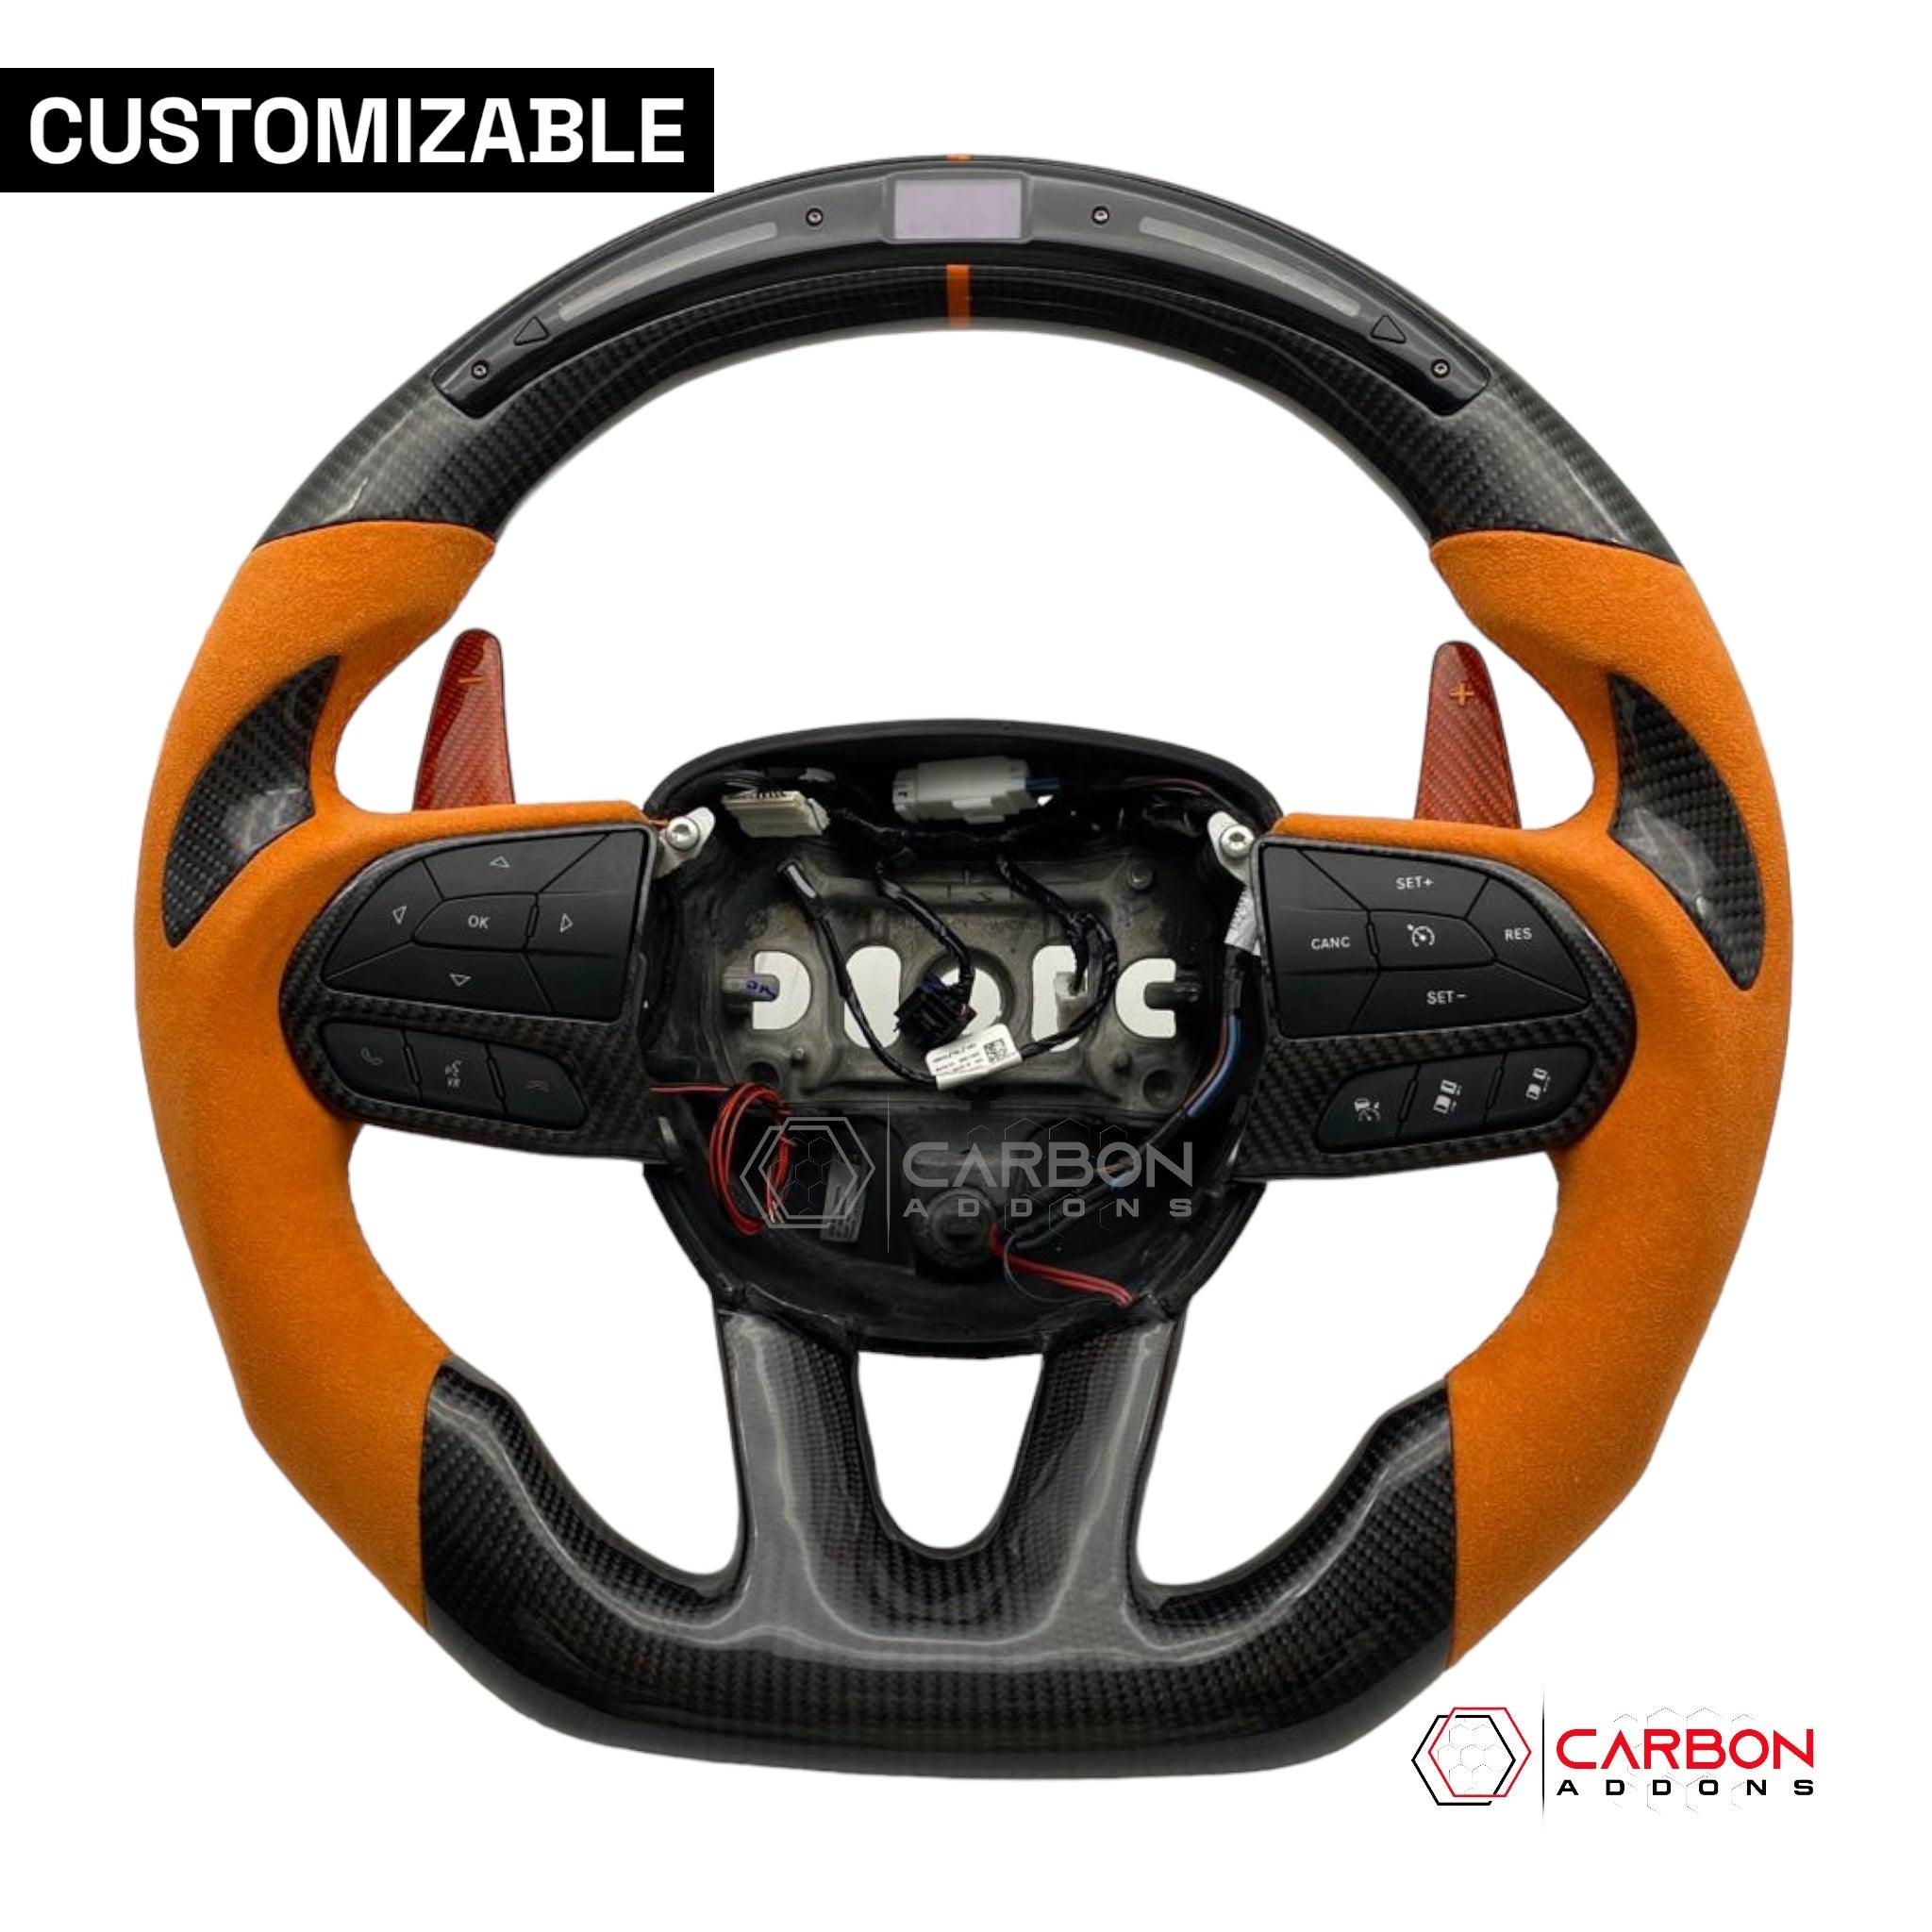 [Complete/Heated] Customizable Carbon Fiber Steering Wheel | 2015-2023 Dodge Charger Challenger Durango - carbonaddons Carbon Fiber Parts, Accessories, Upgrades, Mods